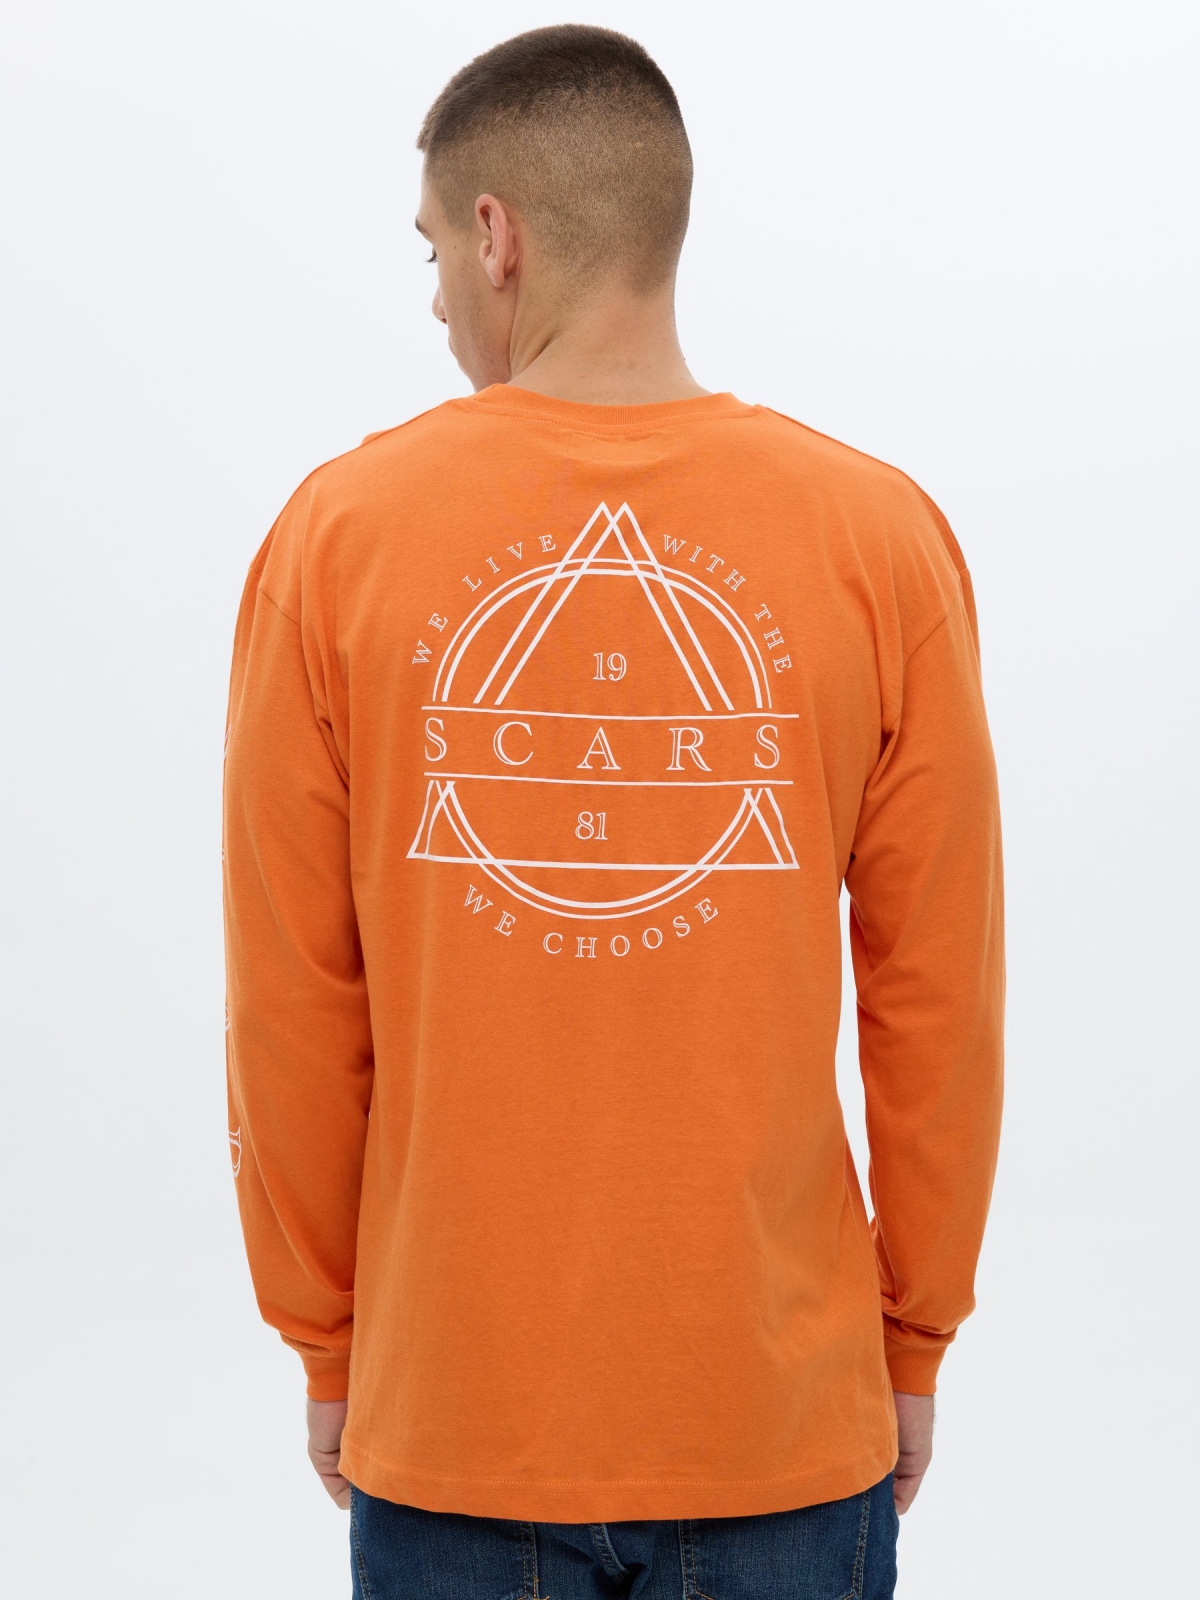 Camiseta tie&dye naranja oscuro vista media trasera